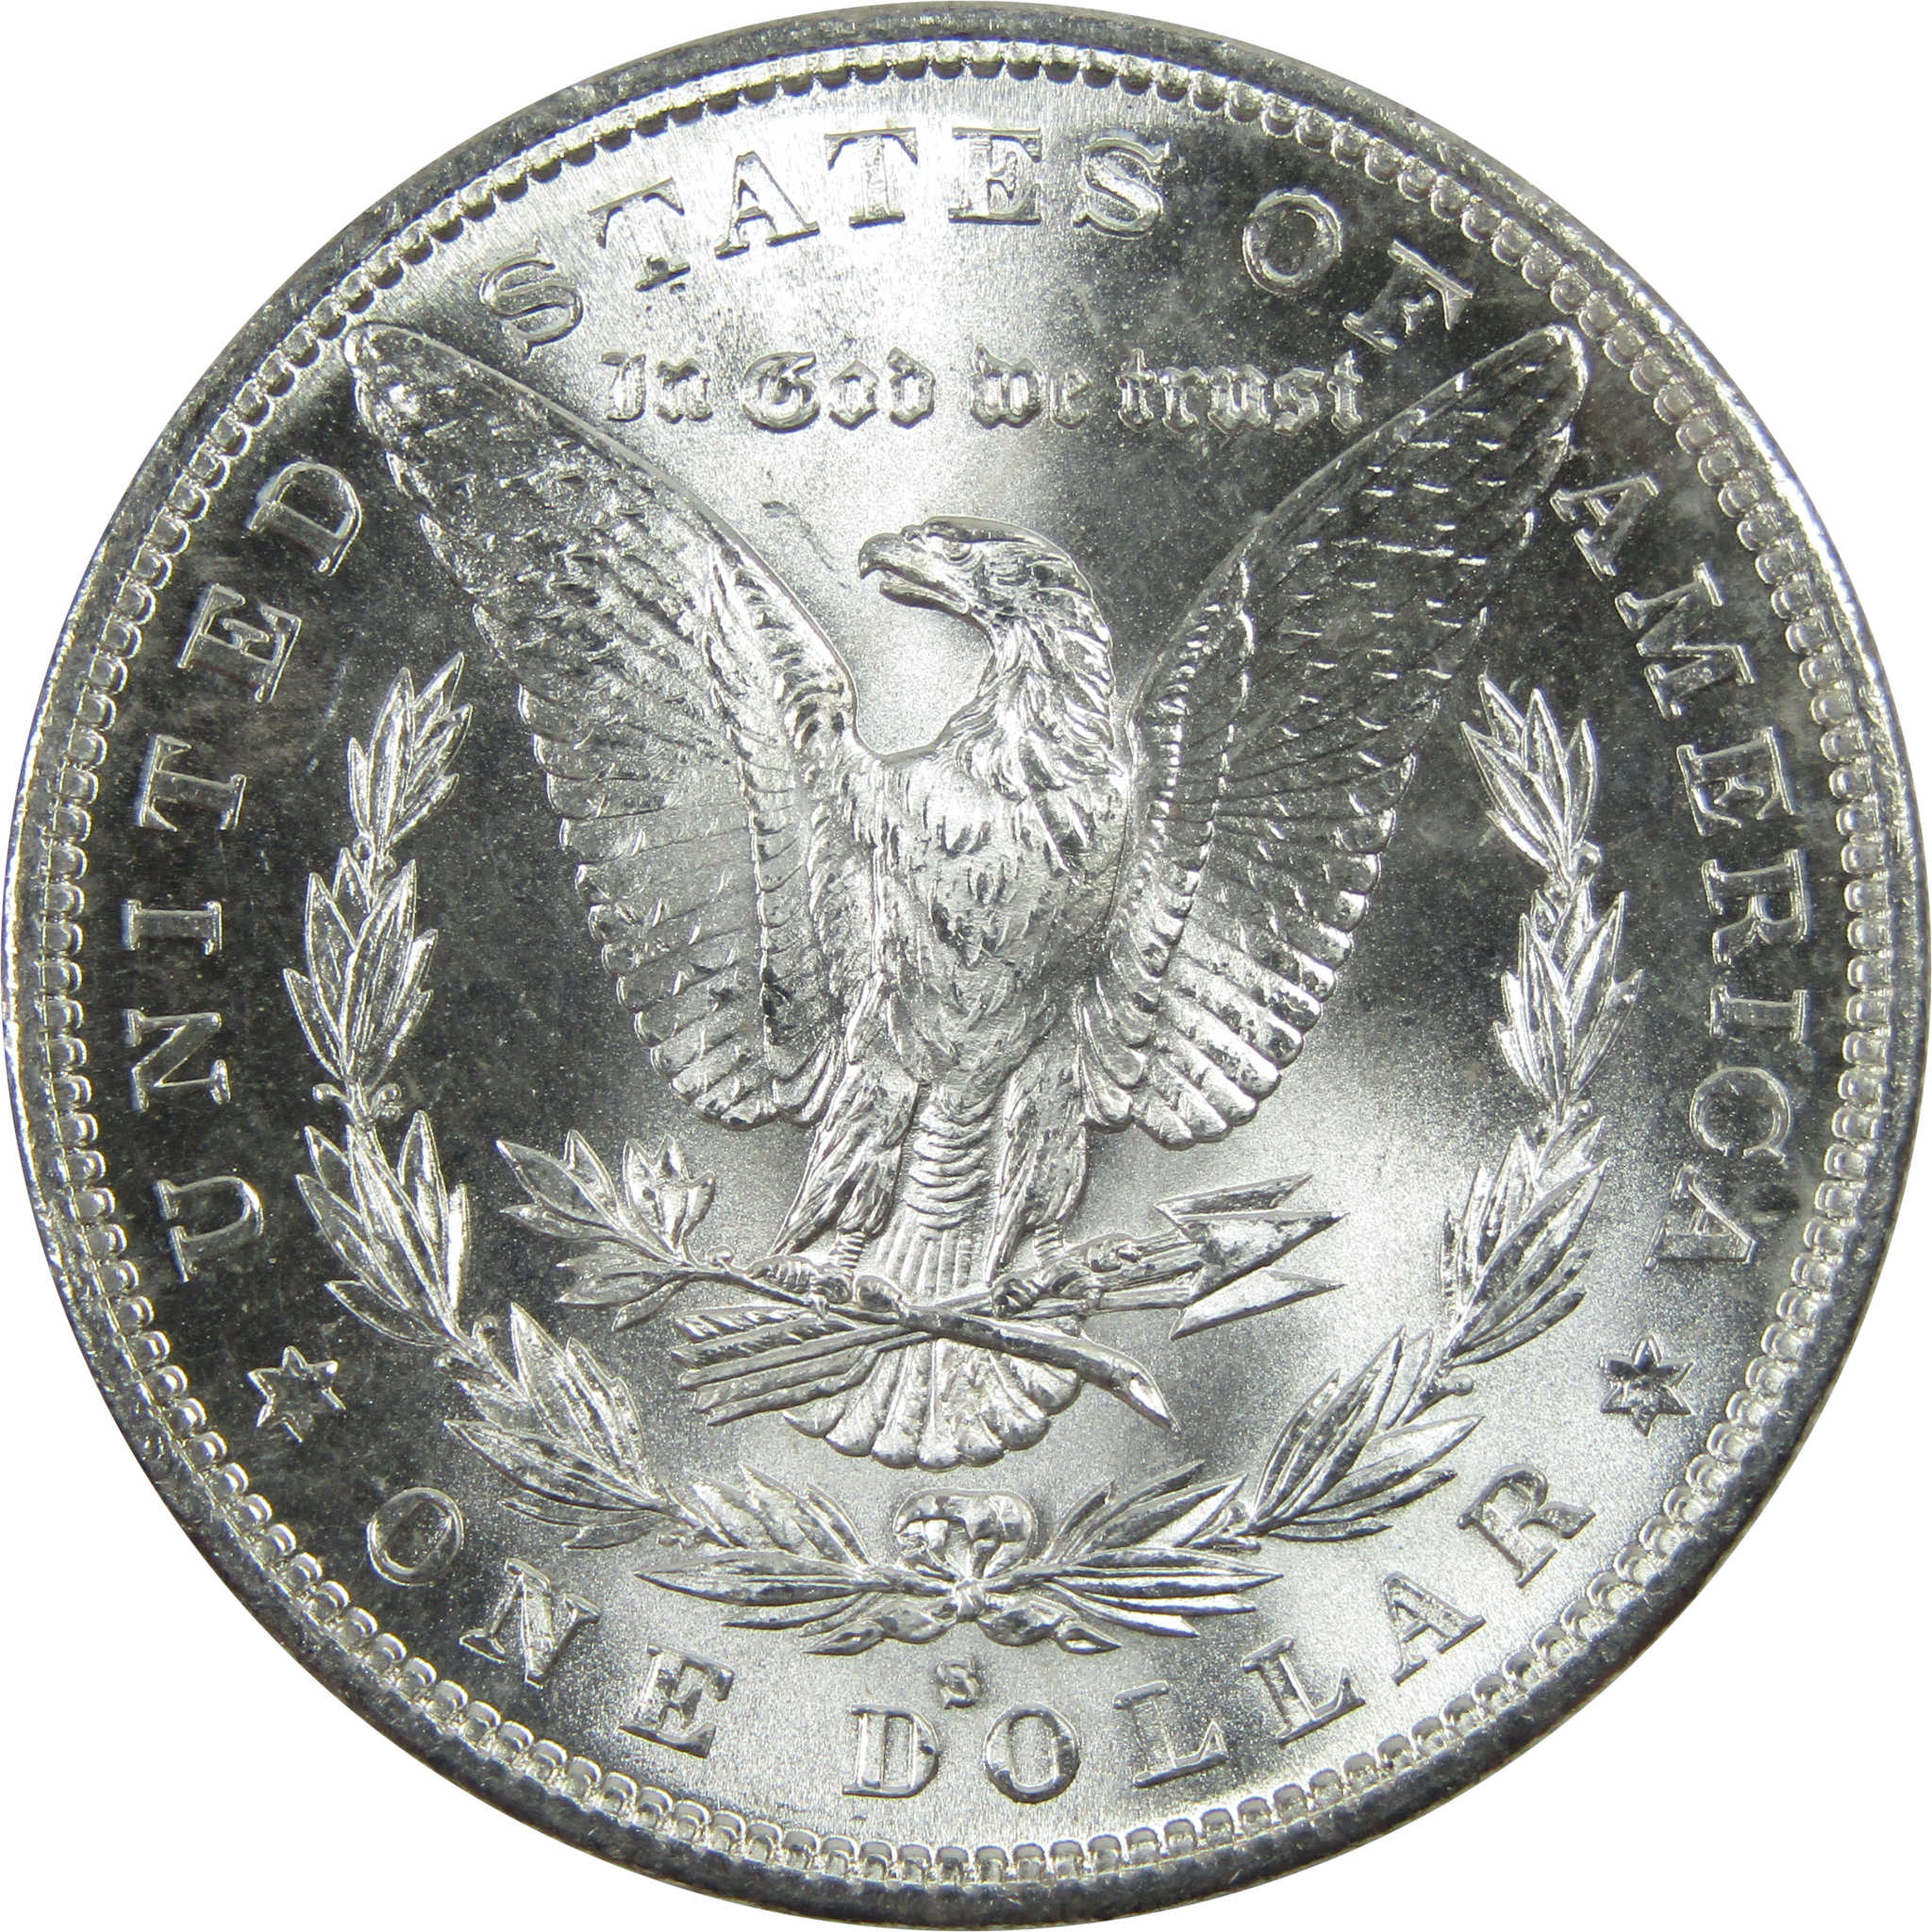 1882 S Morgan Dollar Uncirculated Silver $1 Coin SKU:I13456 - Morgan coin - Morgan silver dollar - Morgan silver dollar for sale - Profile Coins &amp; Collectibles